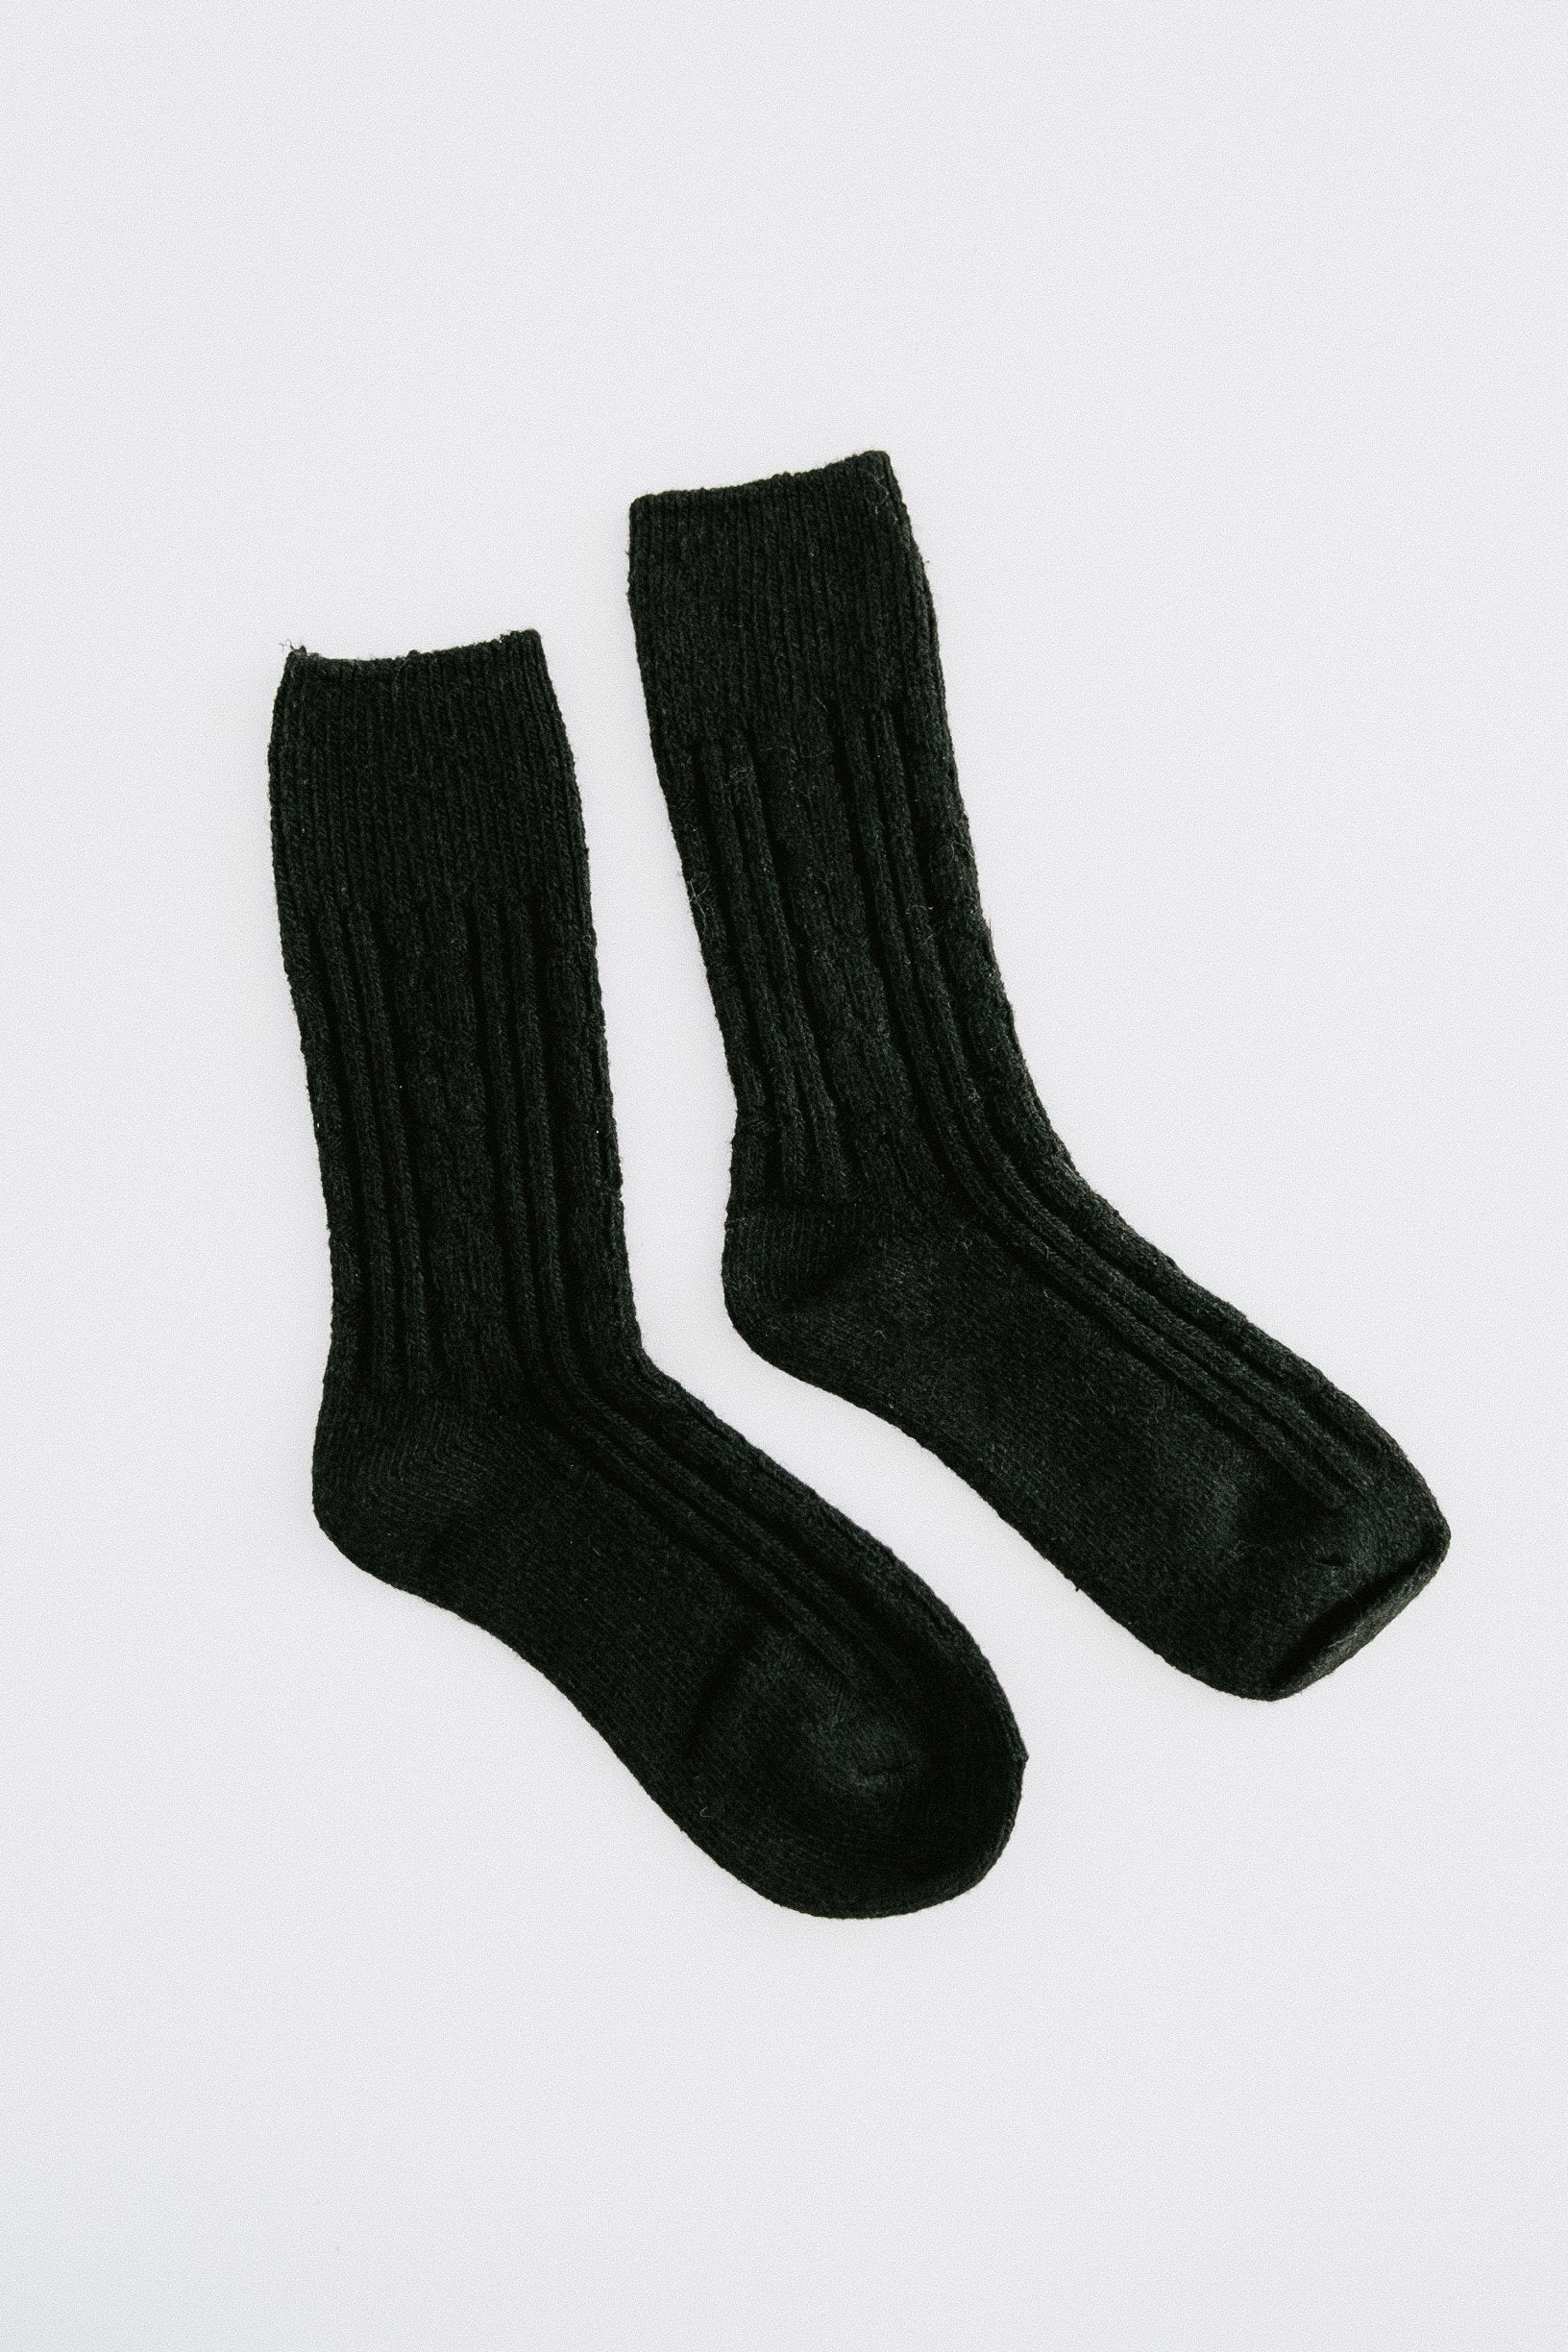 Snuggle Up Knit Sock - Black